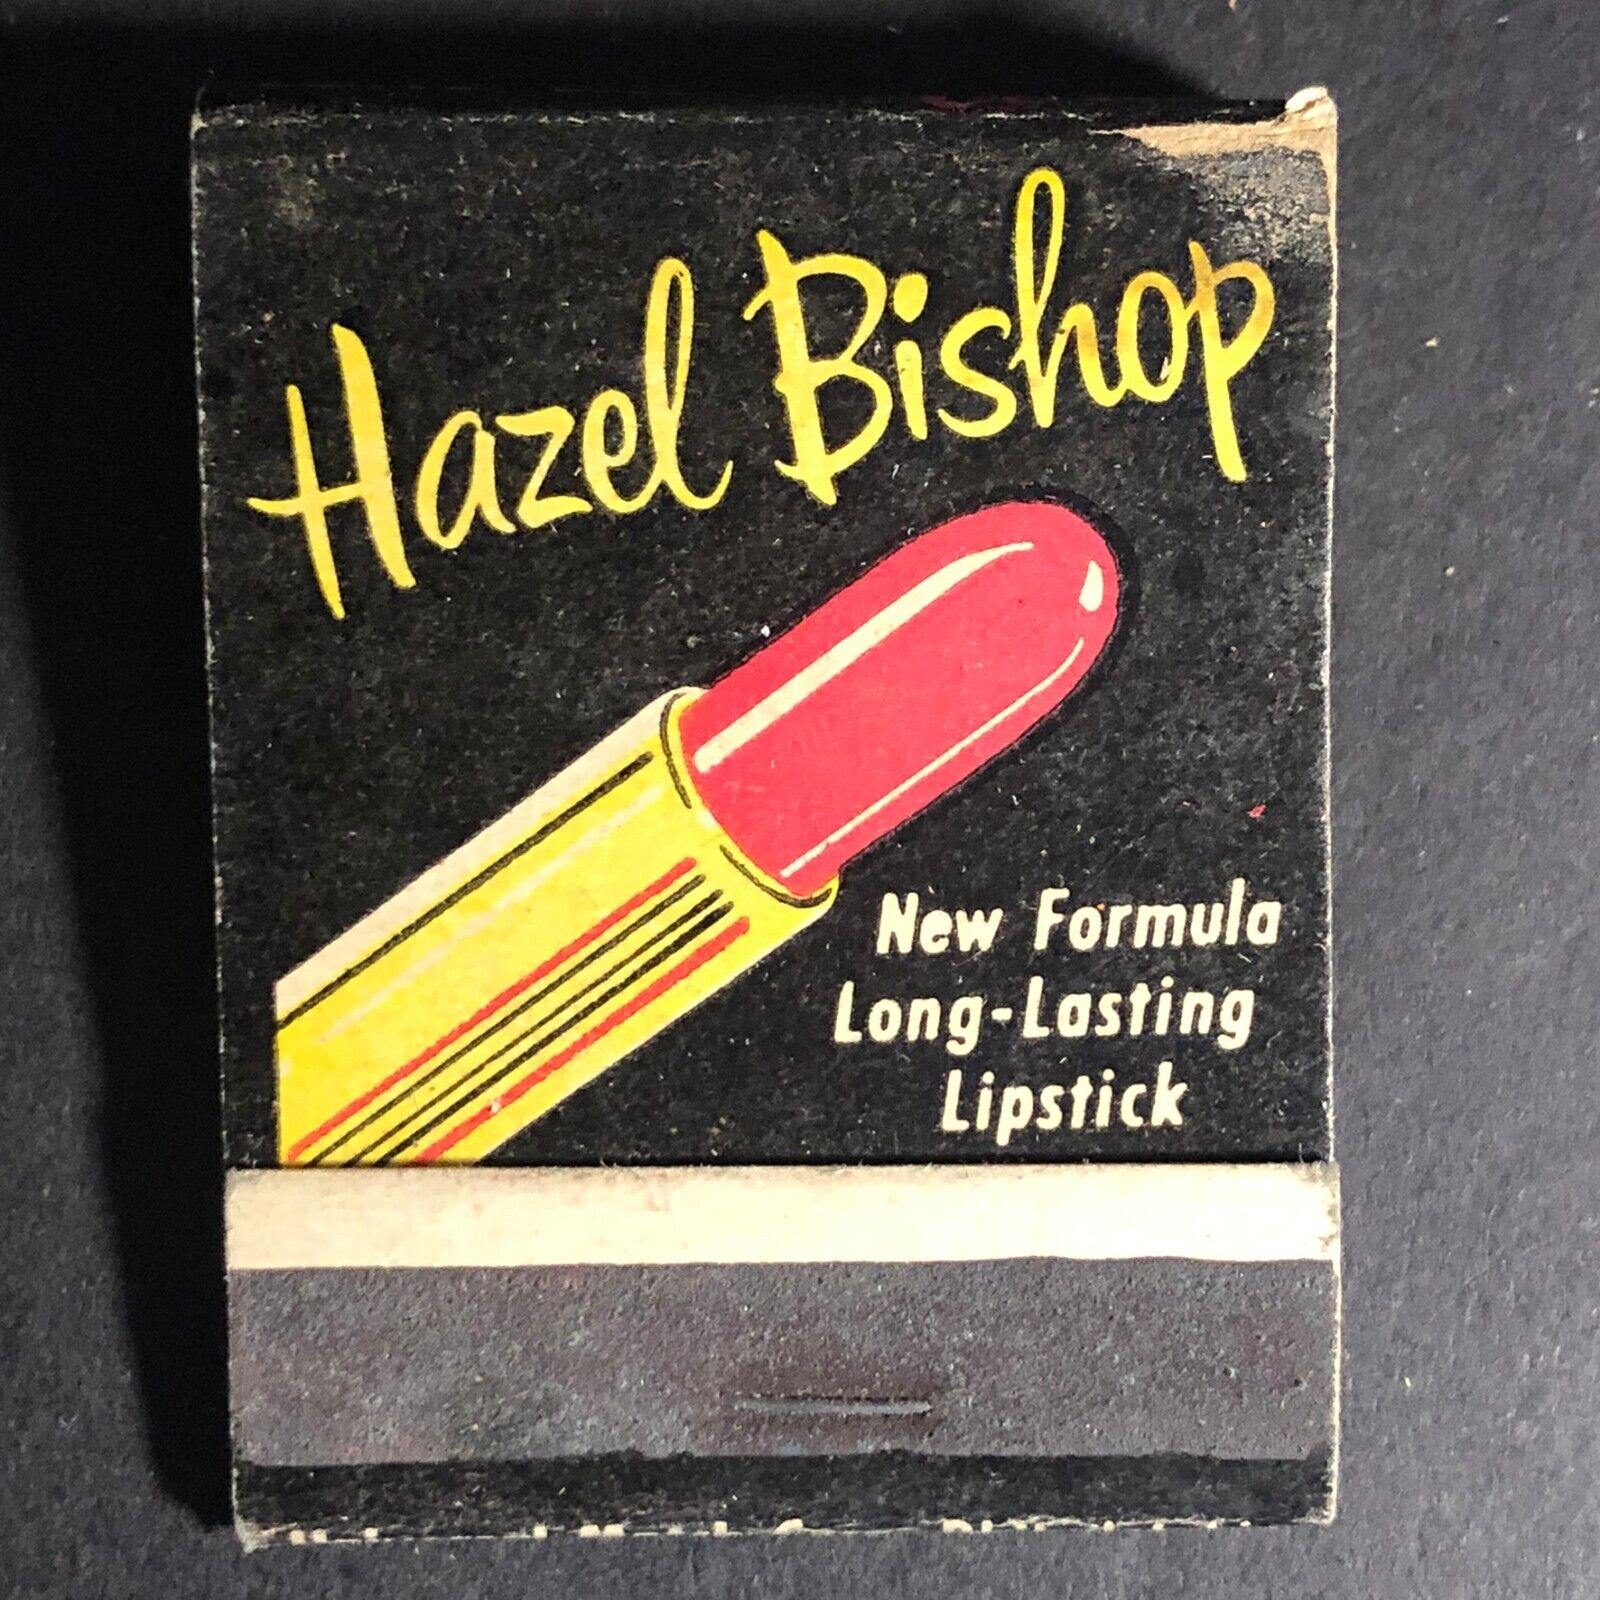 Hazel Bishop Nail Polish Matchbook c1950's Full 20-Strike Very Scarce